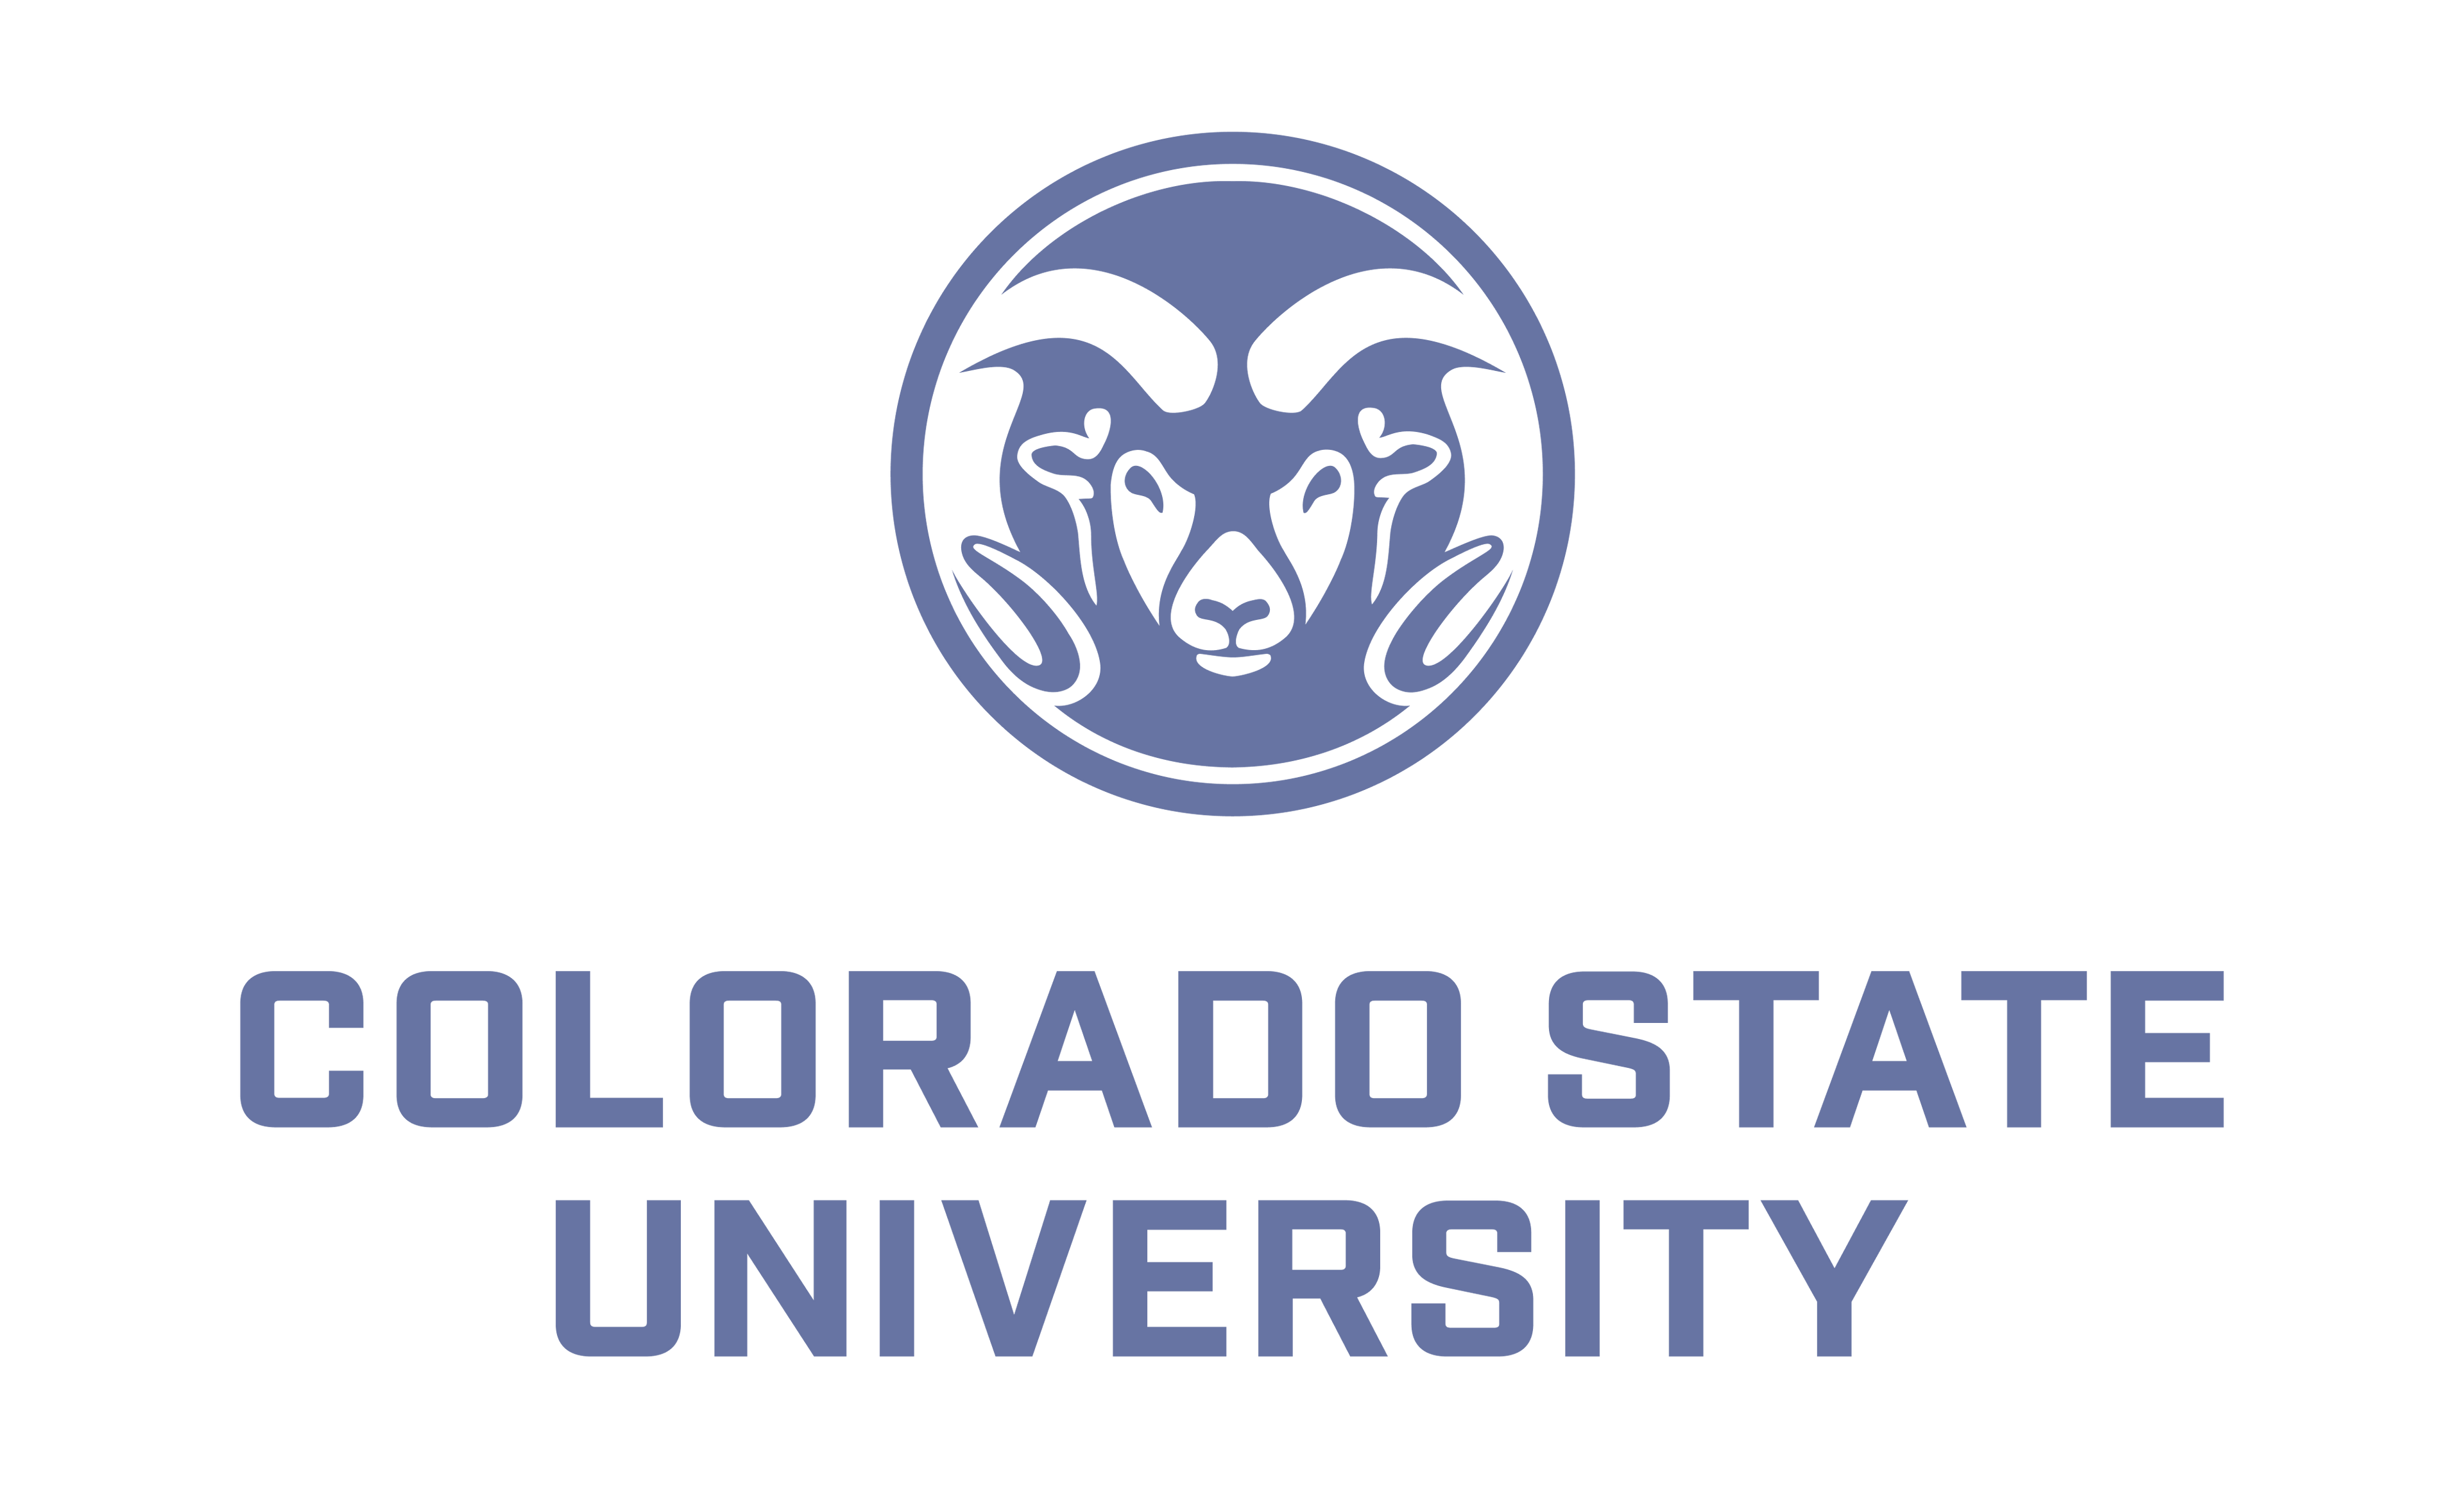 colorado-state-university-logo